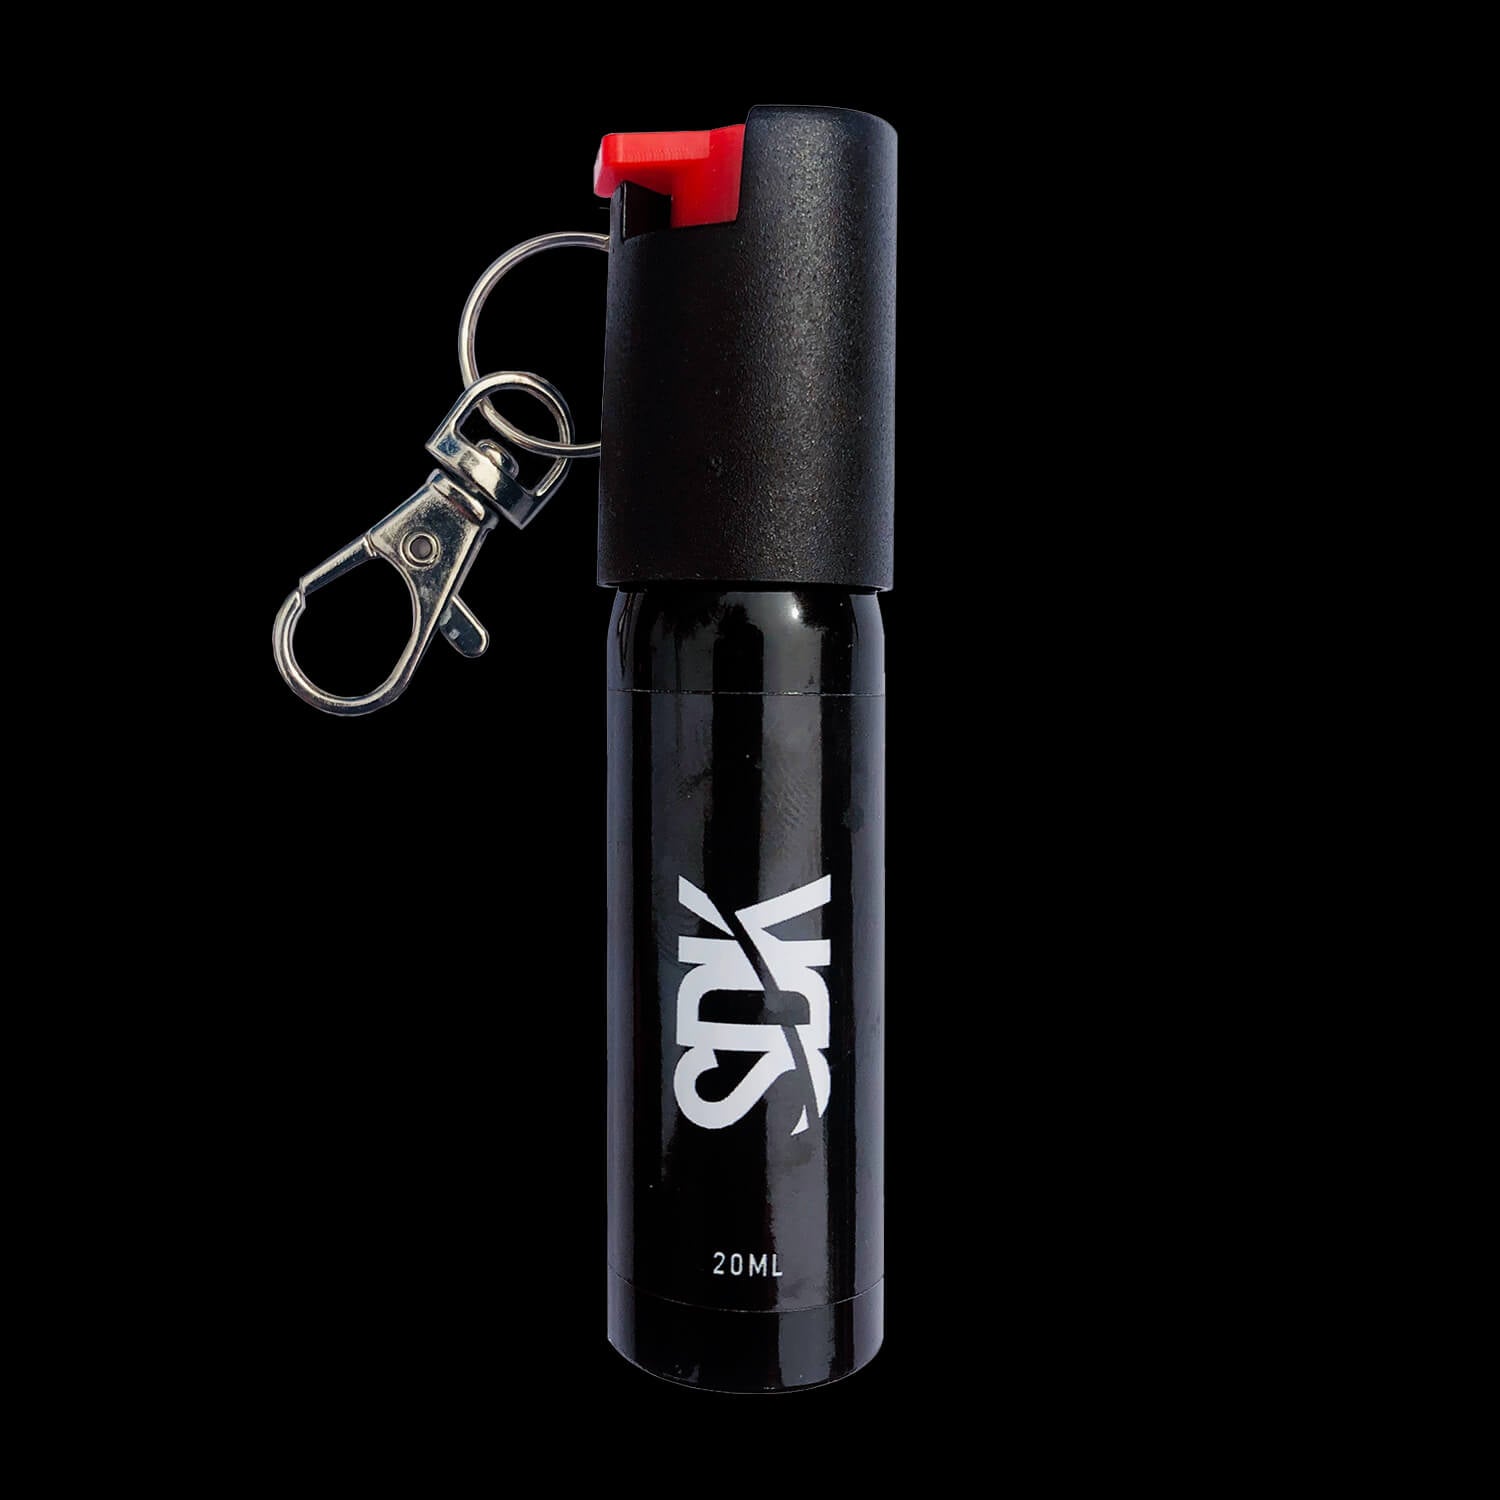 SDK Pepper Spray Black (20ml compact Pepper Spray with keychain attachment)